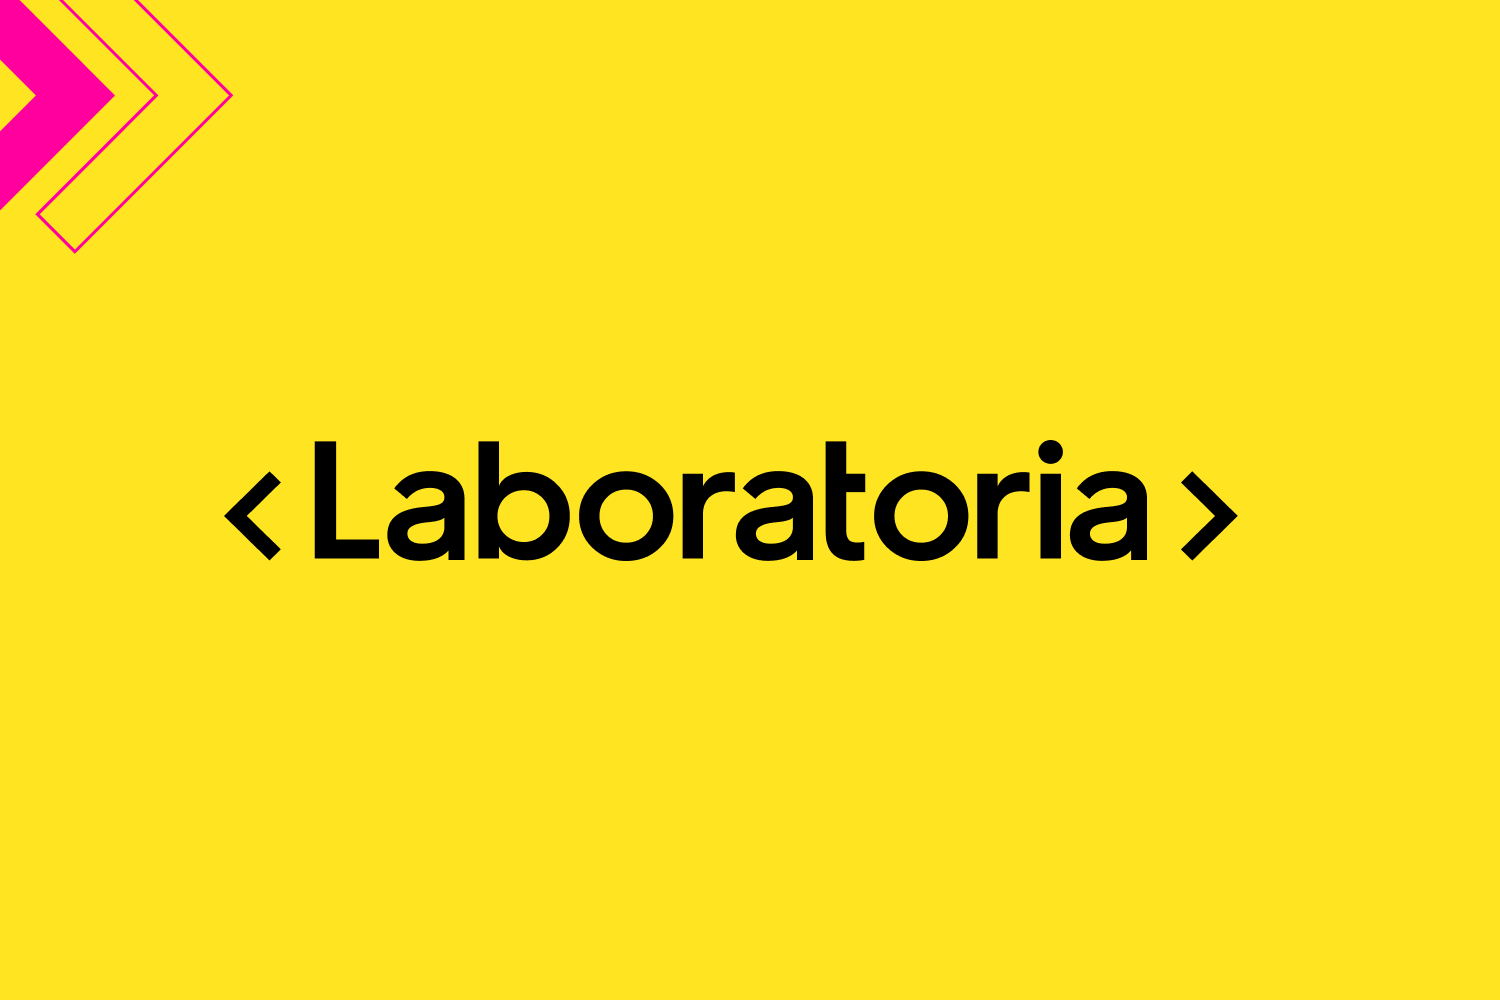 What is Laboratoria?